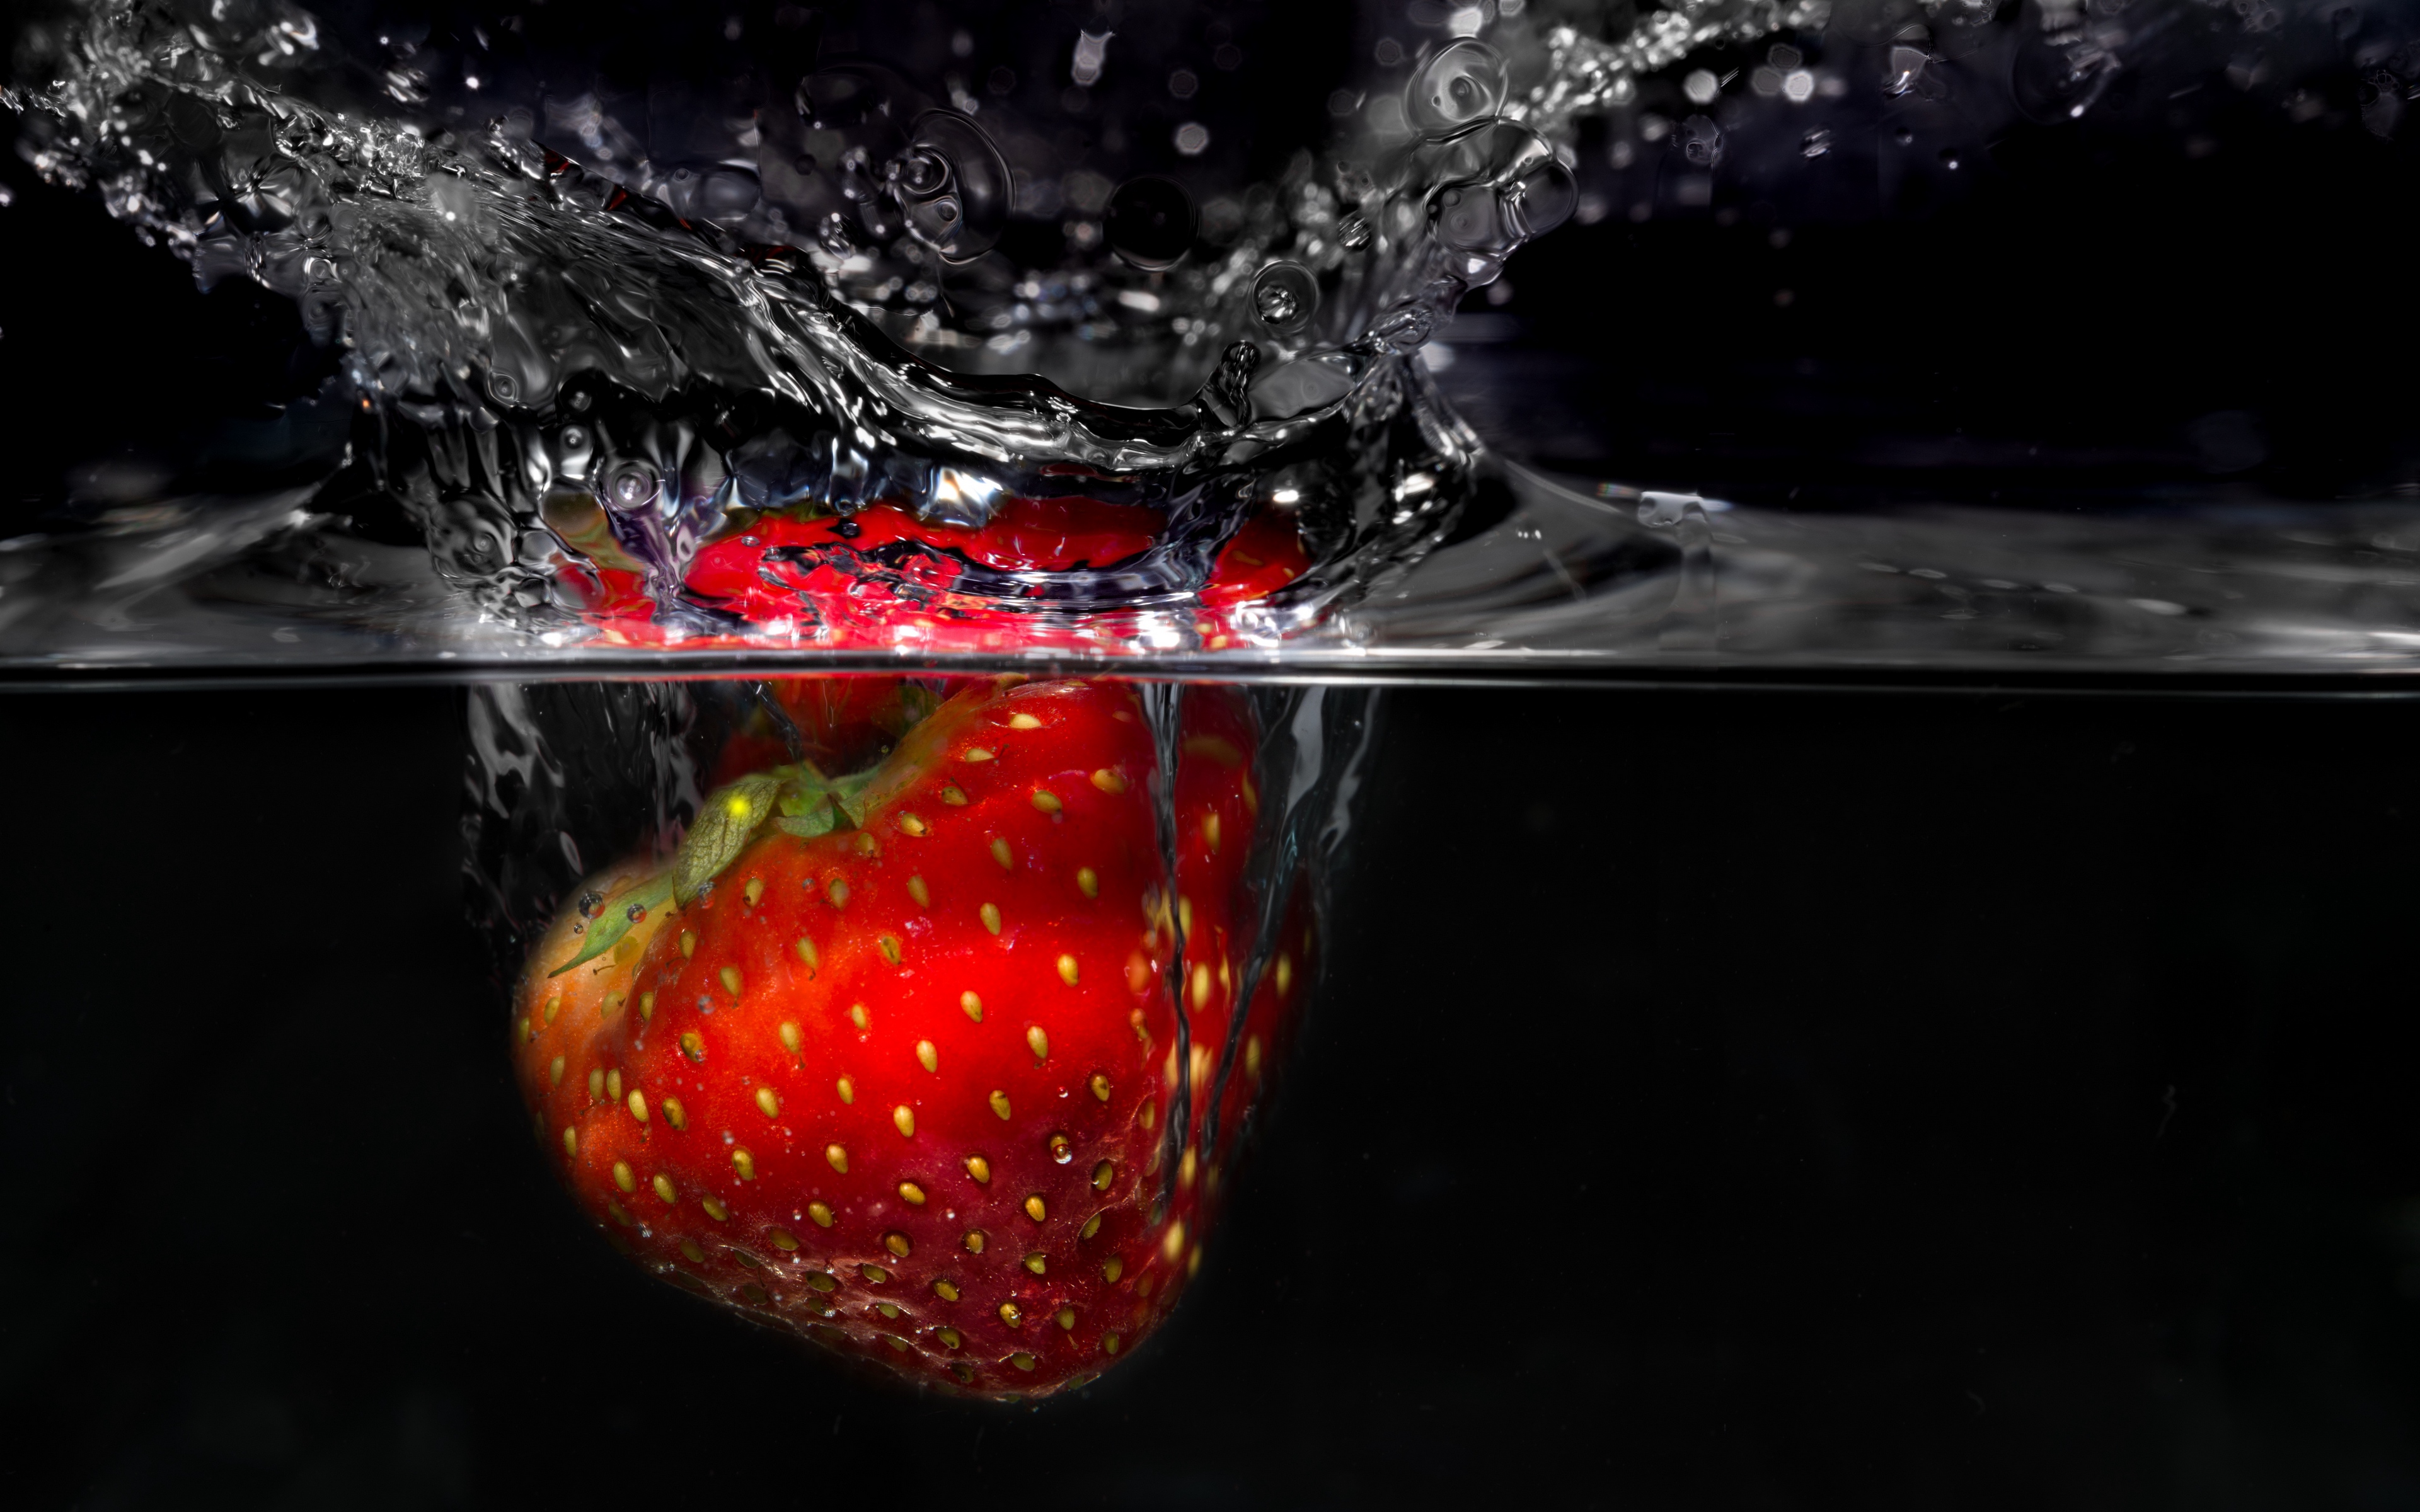 strawberry in water, macro, water spray, berry, 4K wallpaper free download, клубника в воде, макро, брызги воды, ягода, 4К обои скачать бесплатно